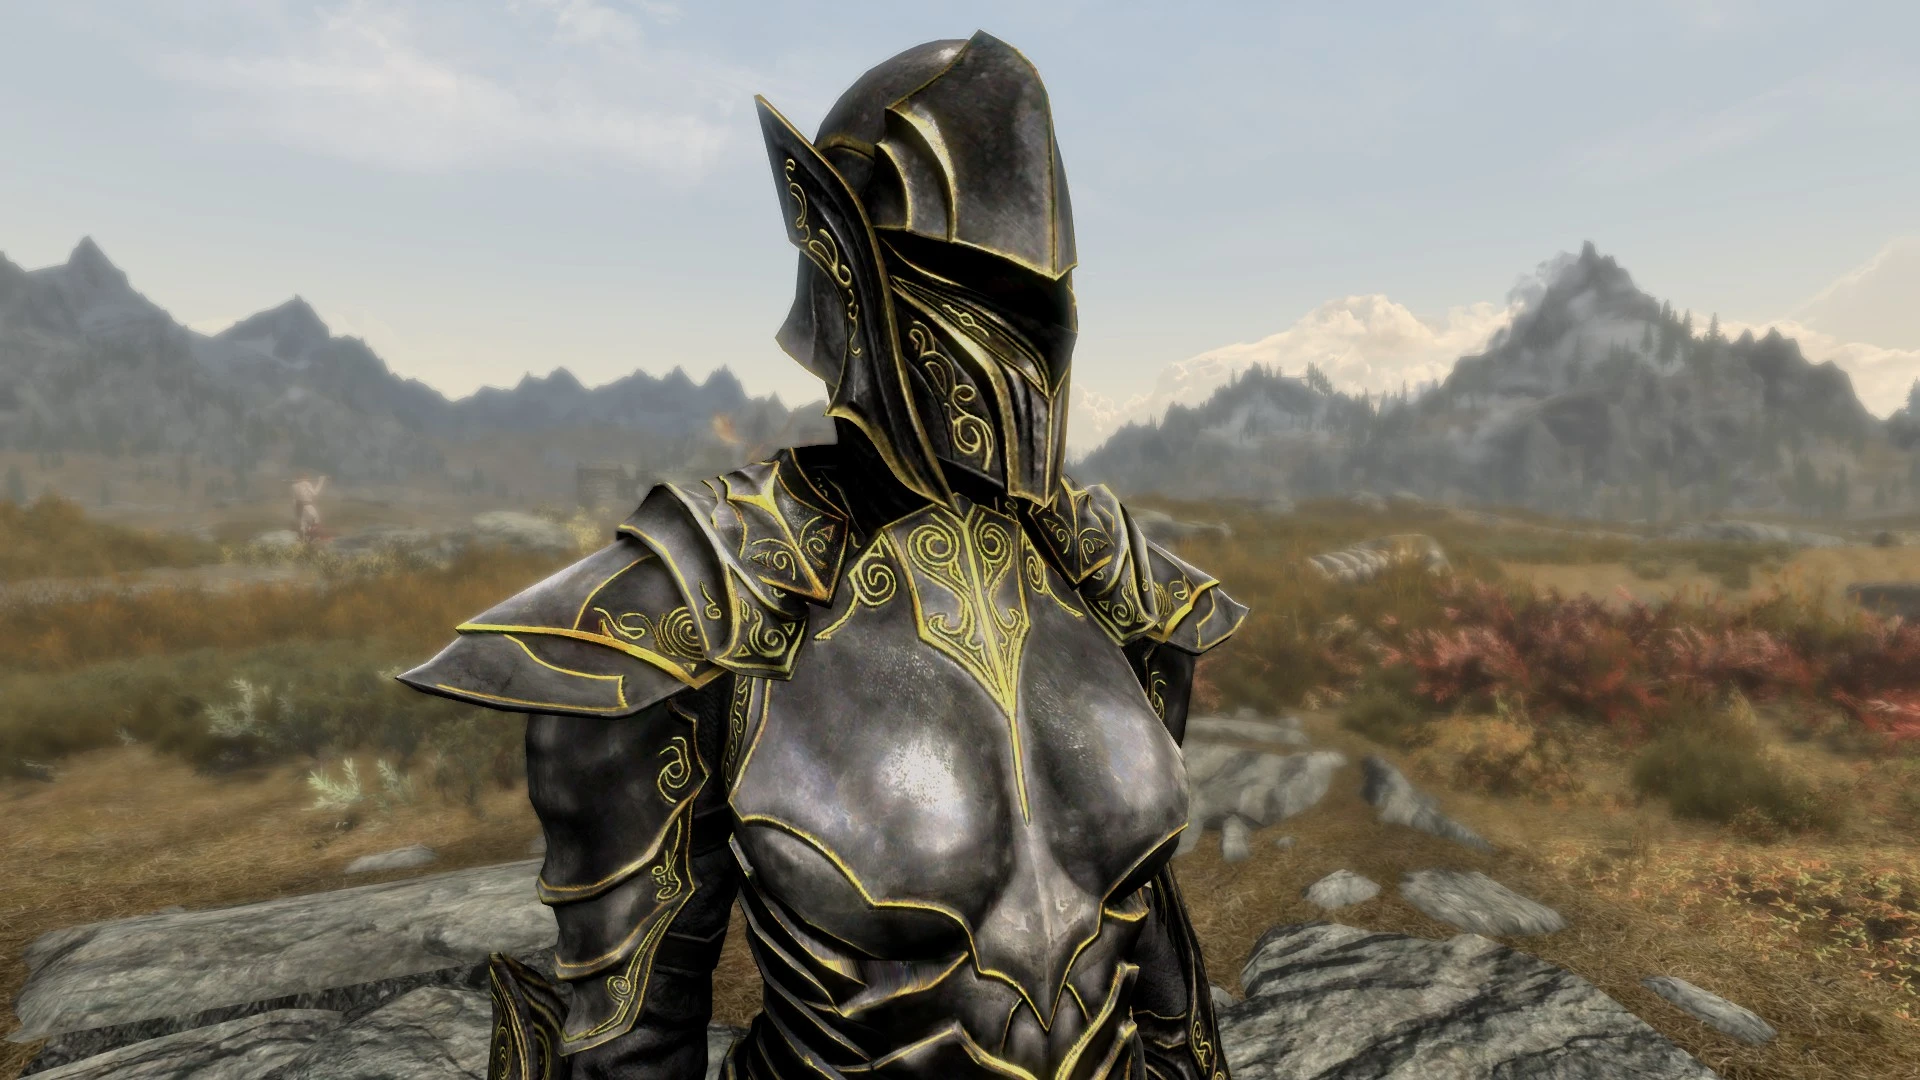 ebony wolf armor re texture at skyrim nexus mods and community.